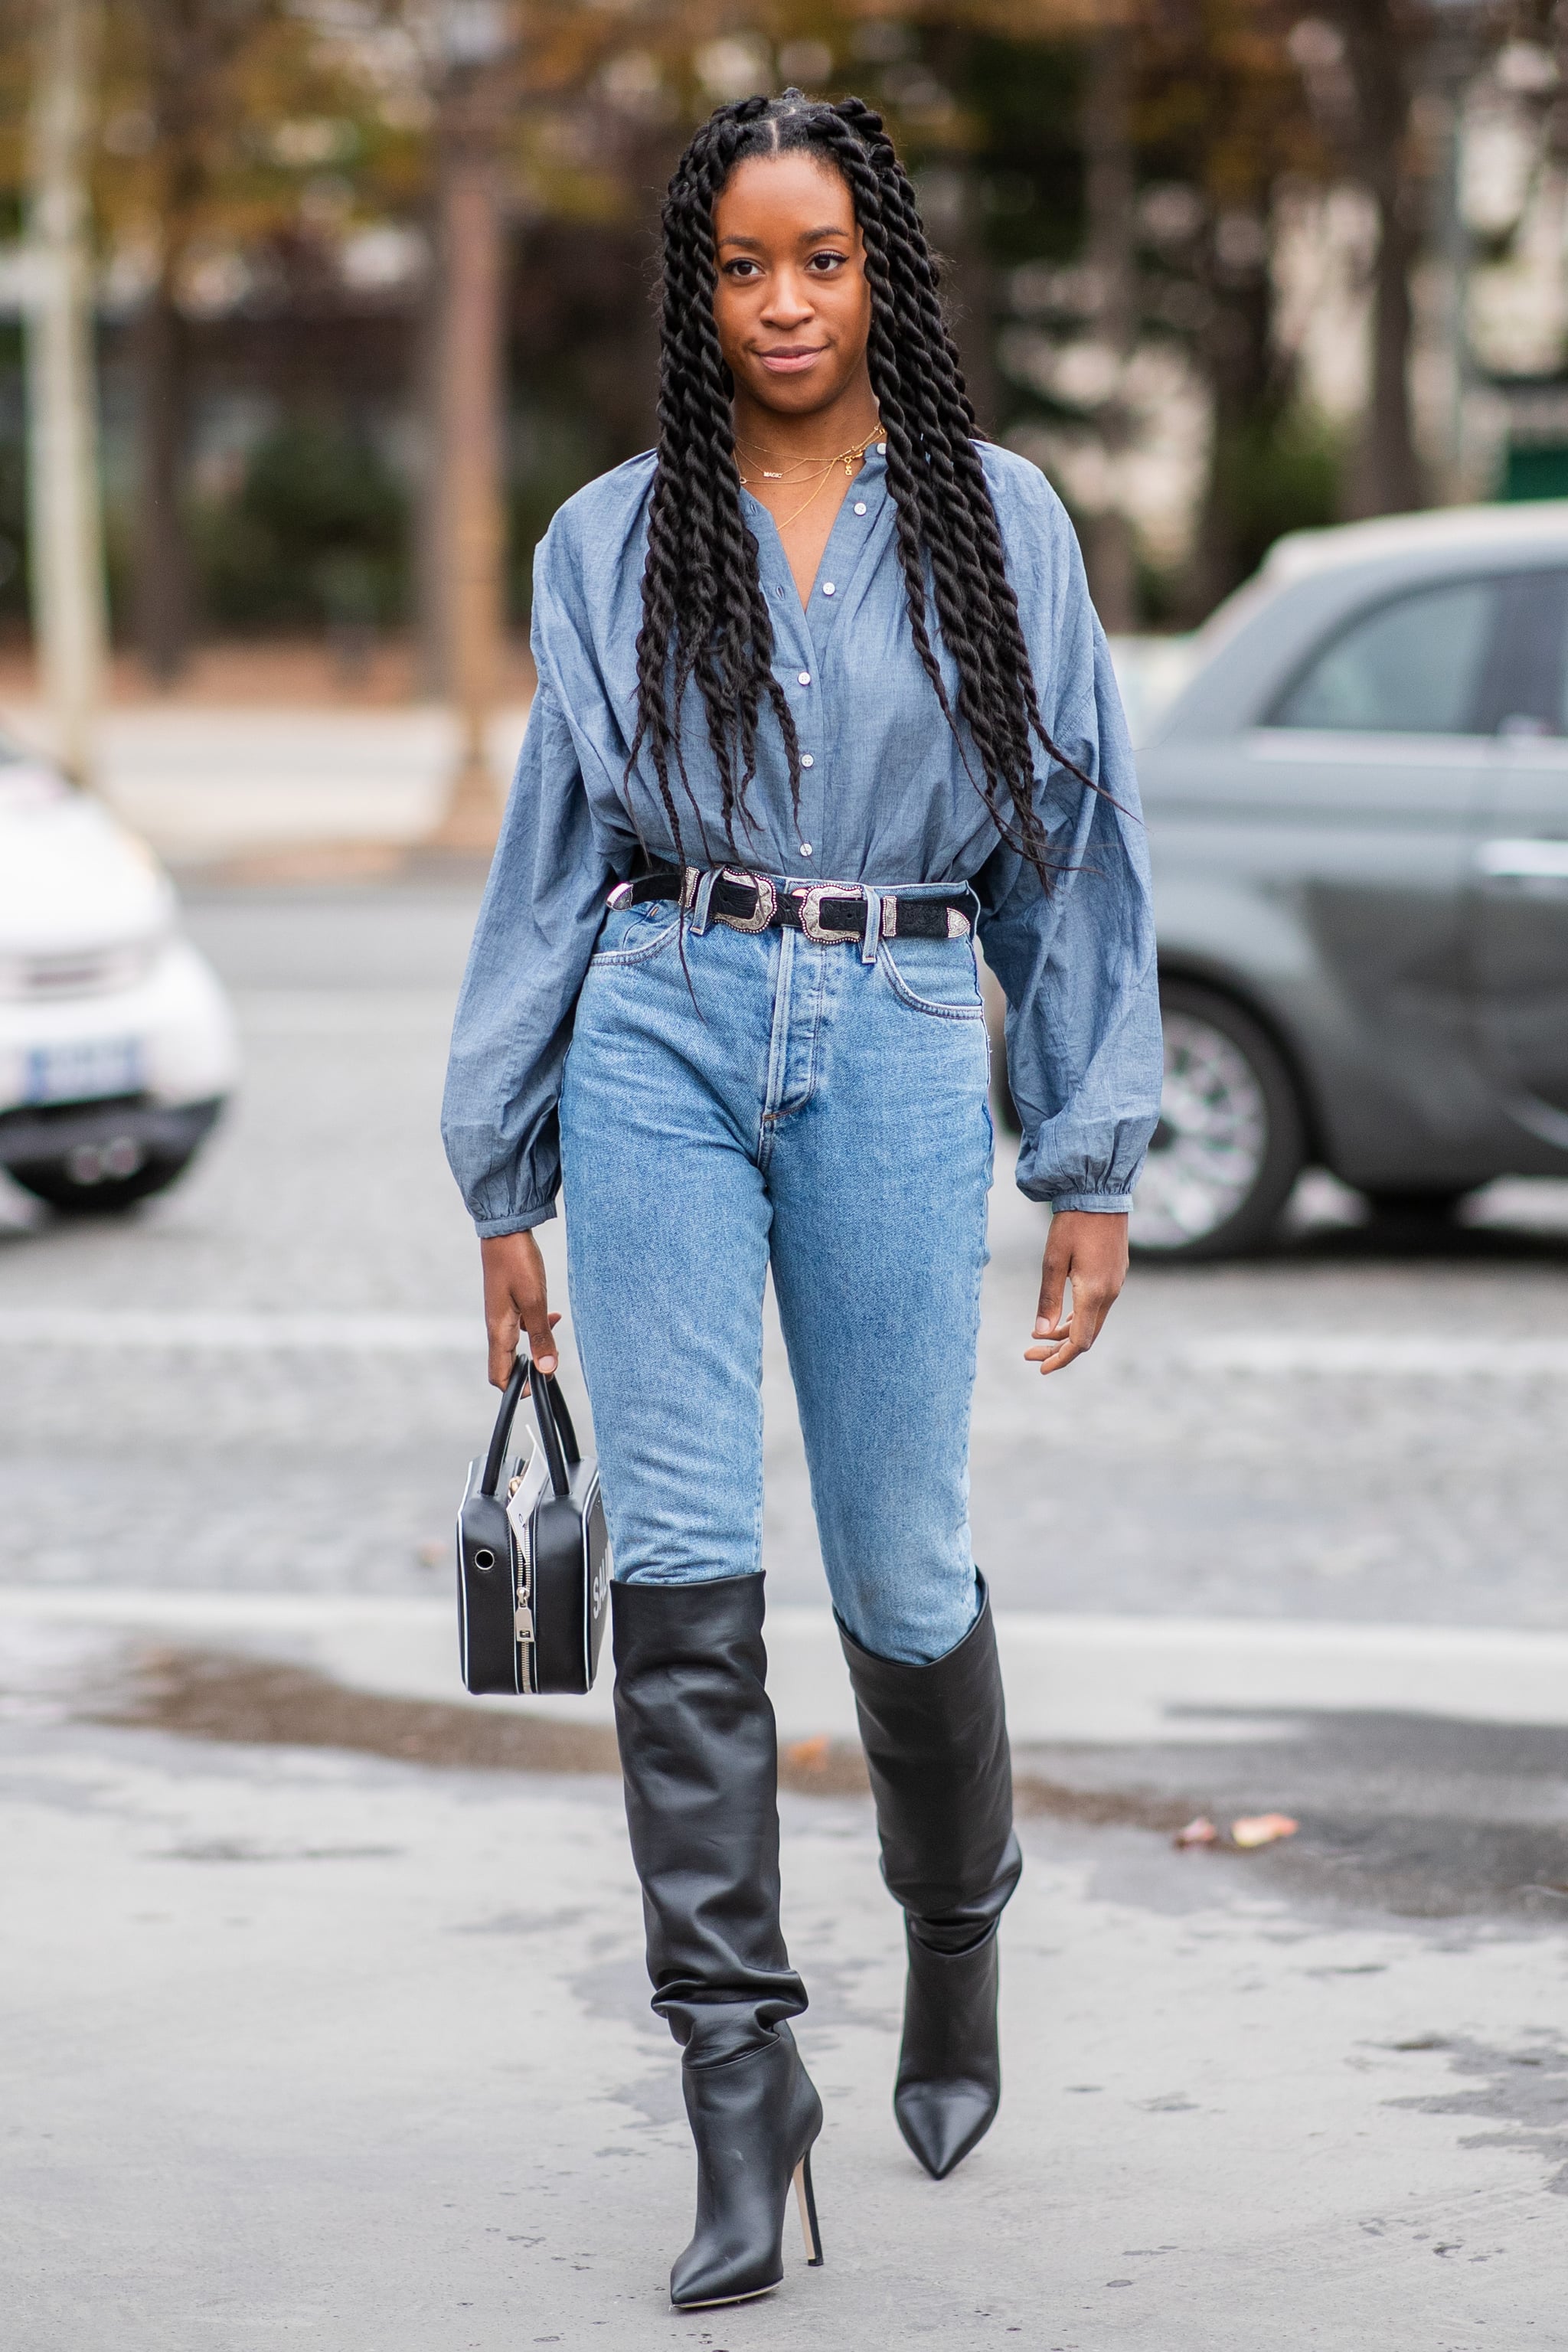 schoner waarom niet fossiel How to Wear Skinny Jeans 2019 | POPSUGAR Fashion